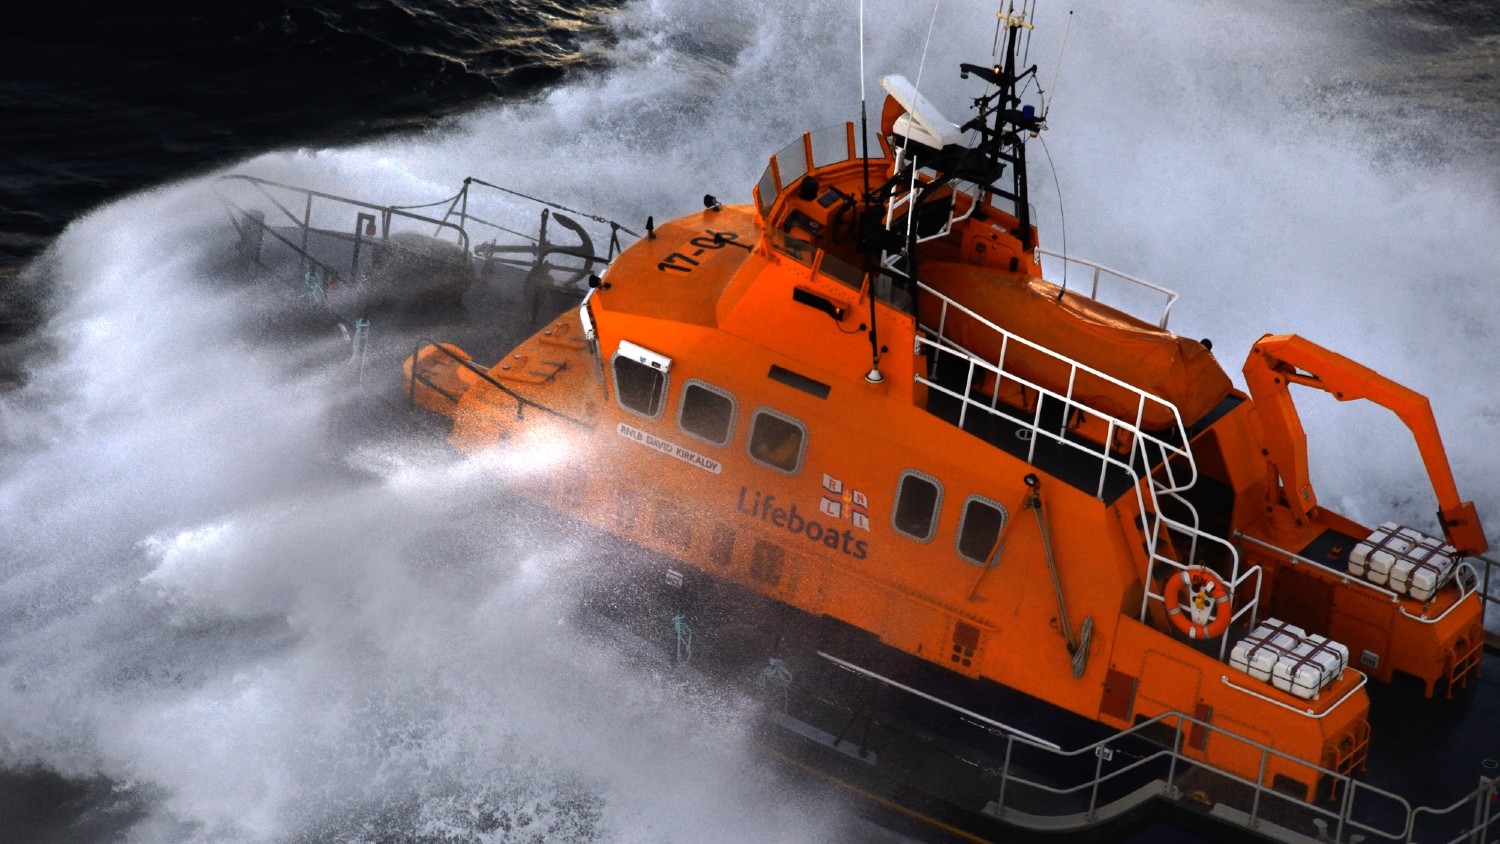 Aran Islands RNLI’s Severn class lifeboat, David Kirkaldy 17-06, powering through rough seas